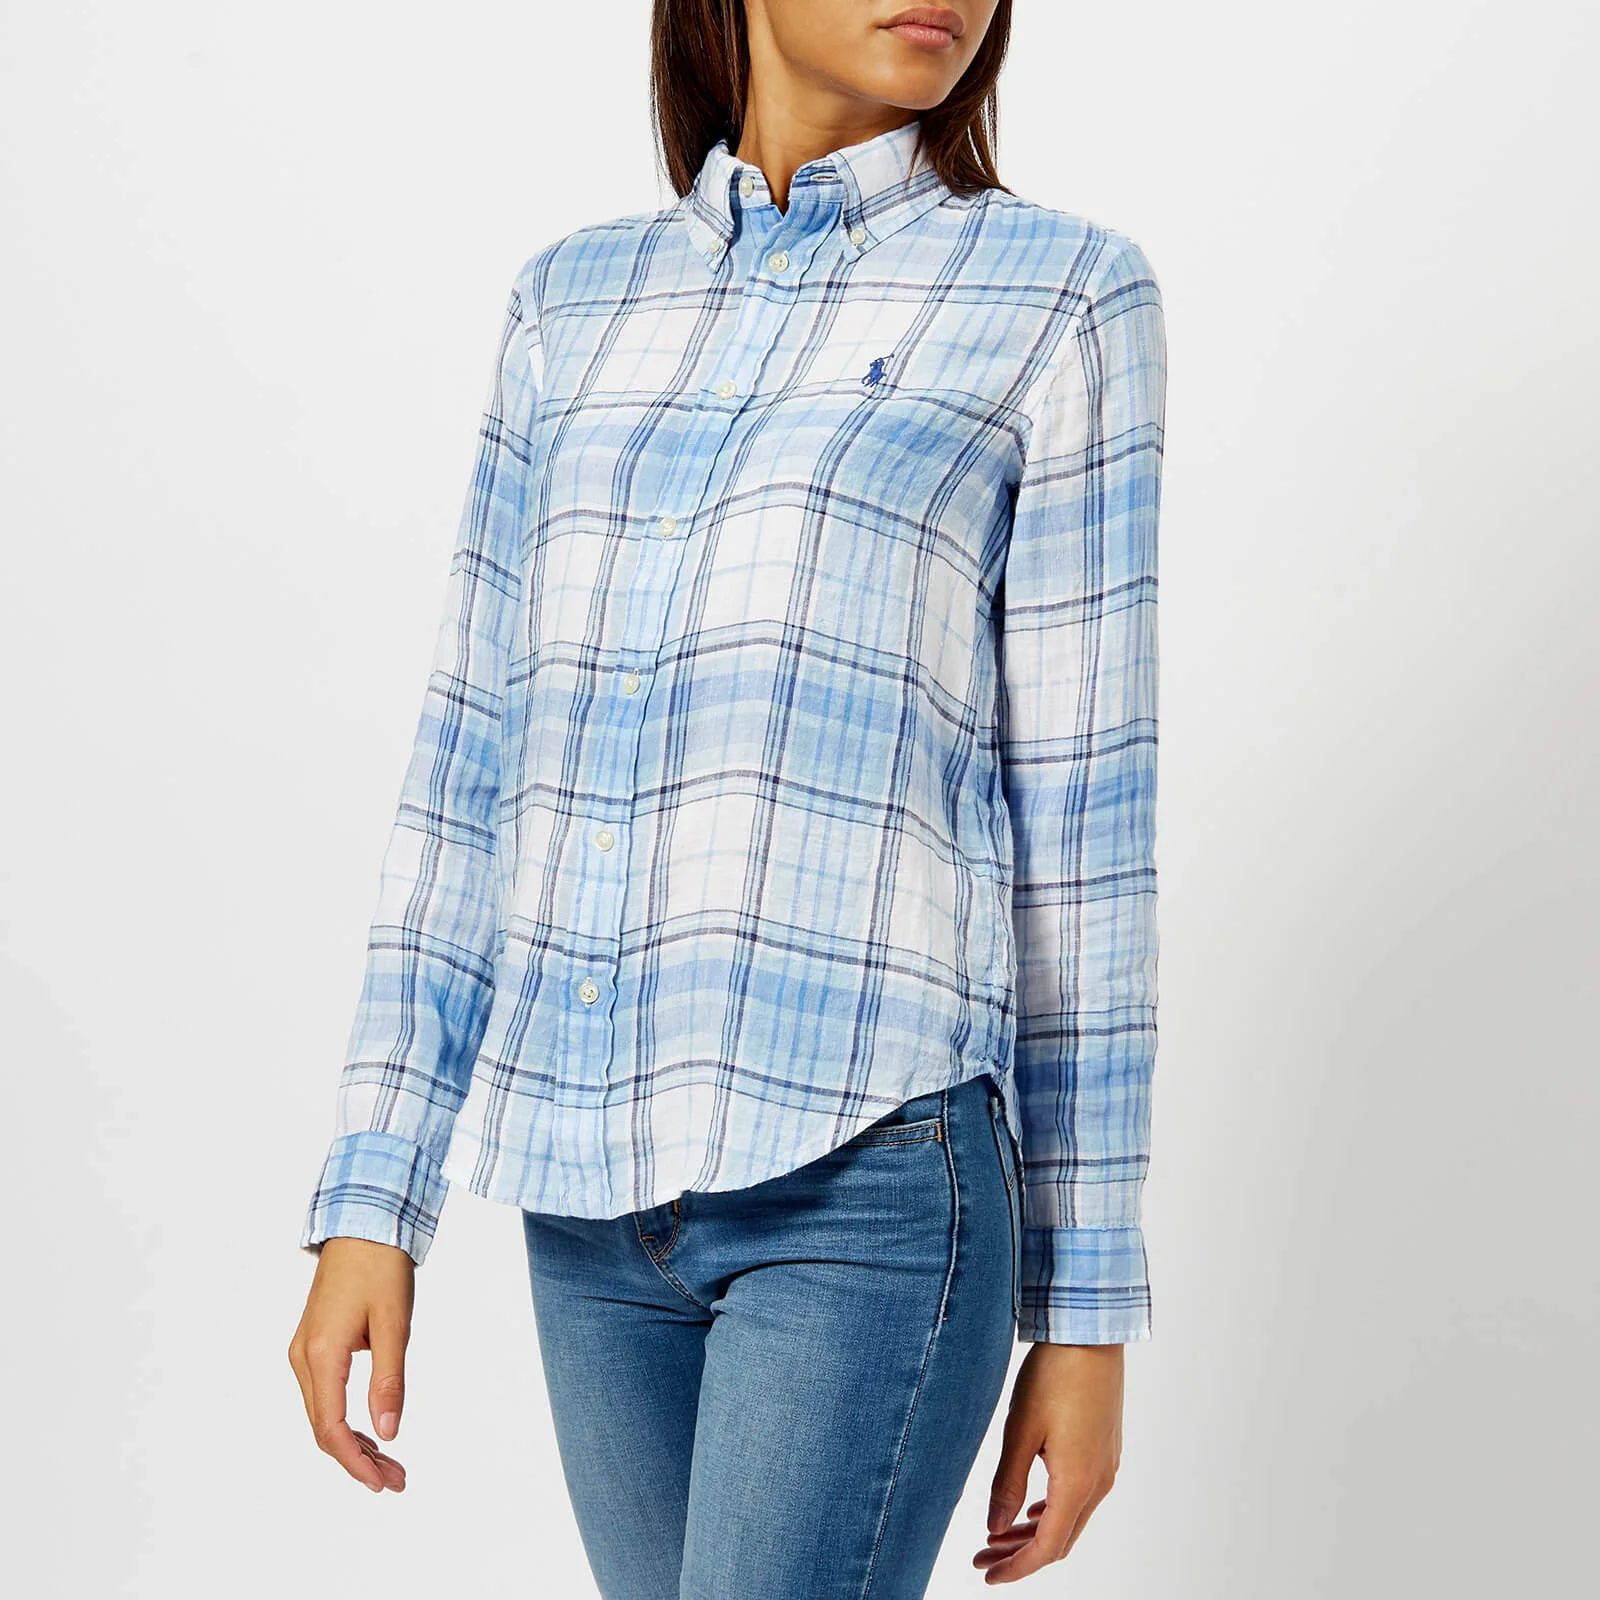 Polo Ralph Lauren Women's Logo Checked Linen Shirt - Blue/White Image 1